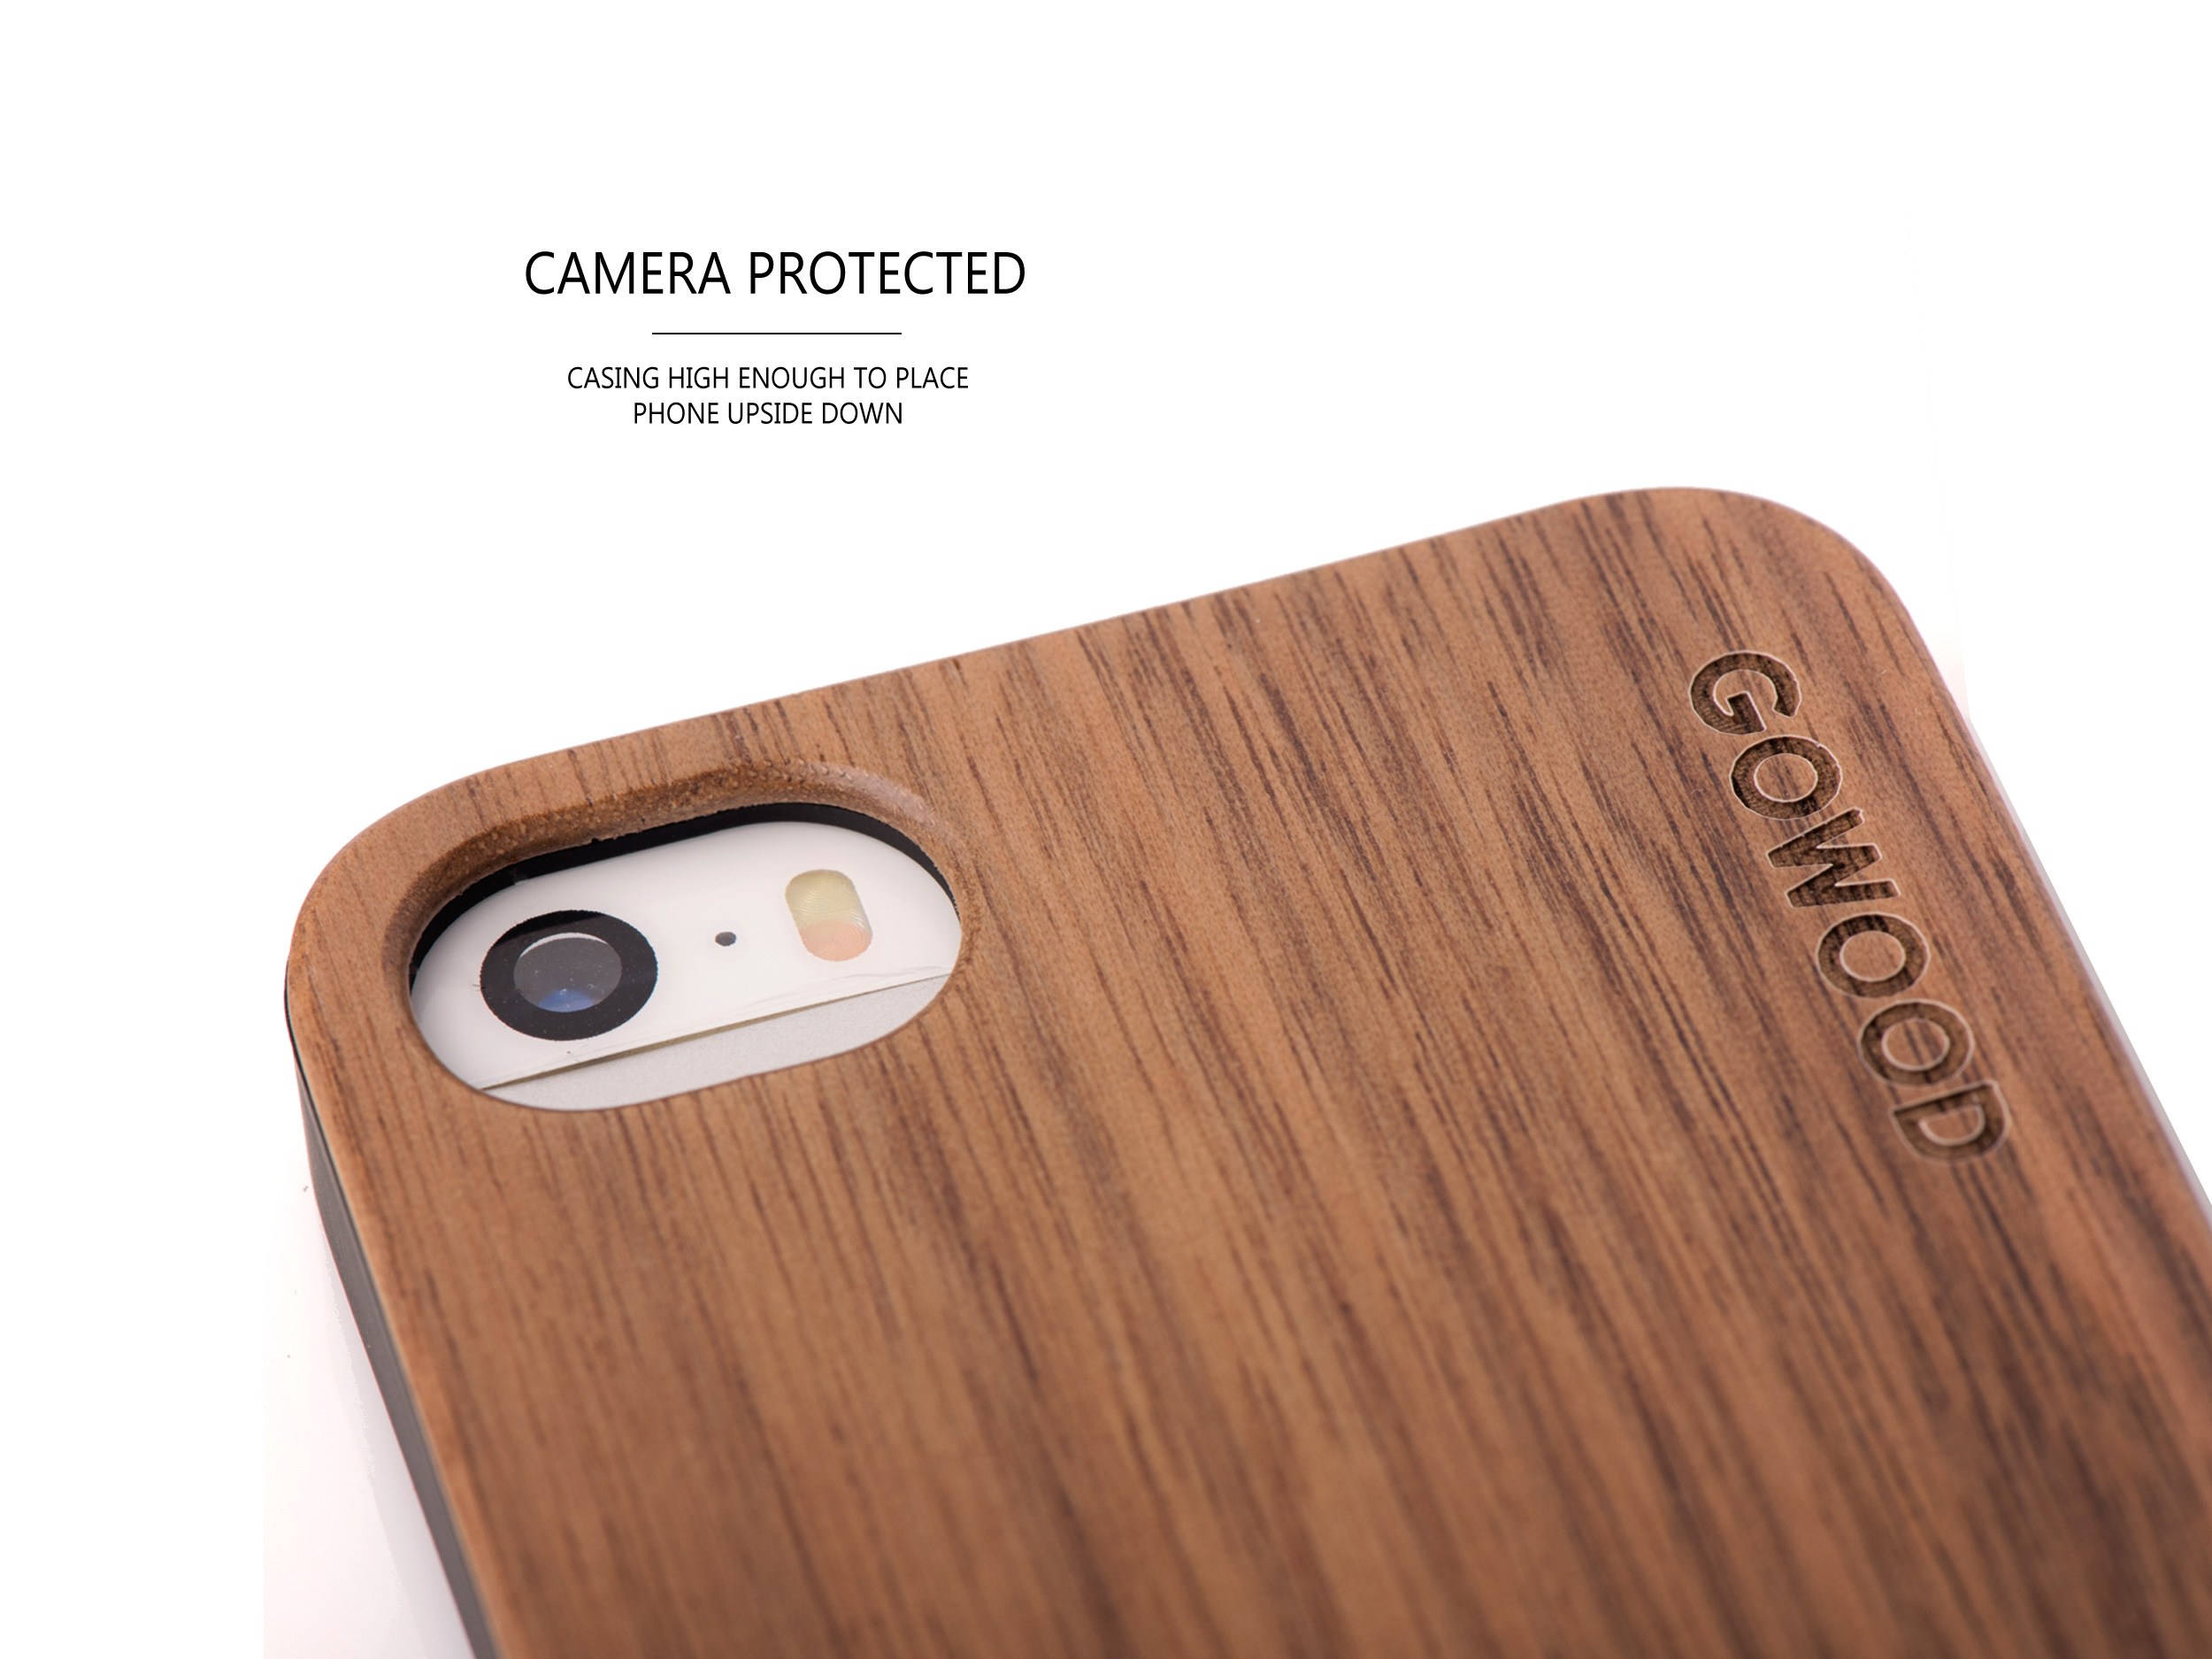 iphone 5 wood case camera